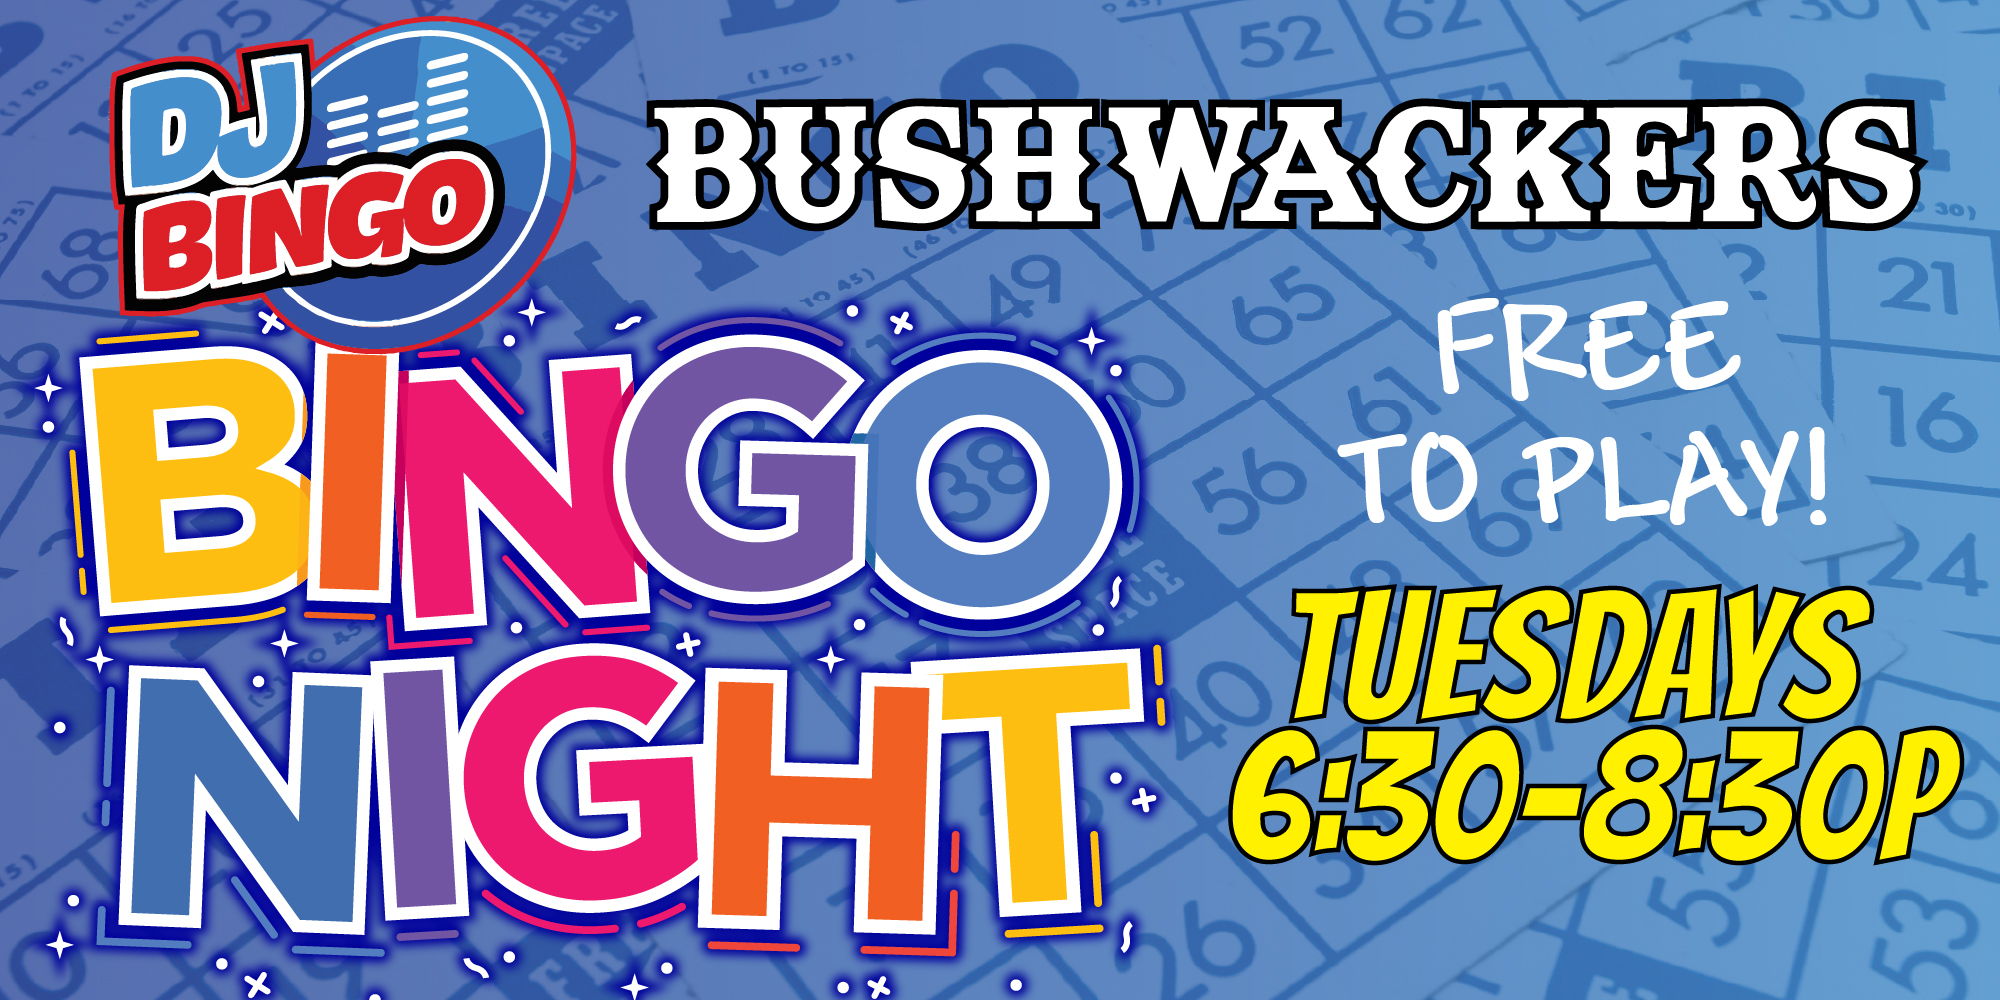 Music Bingo at Bushwackers promotional image